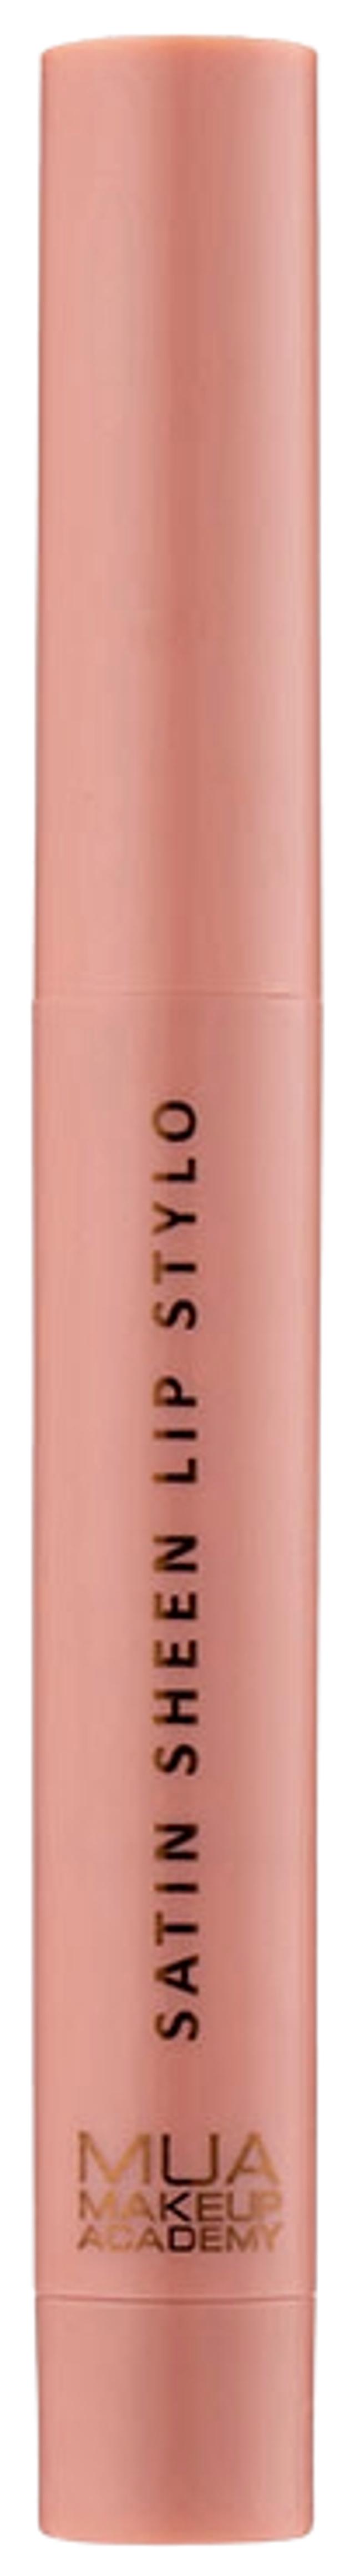 MUA Make Up Academy Satin Sheen Lip Stylo  2,4 g Heroic huulipuna